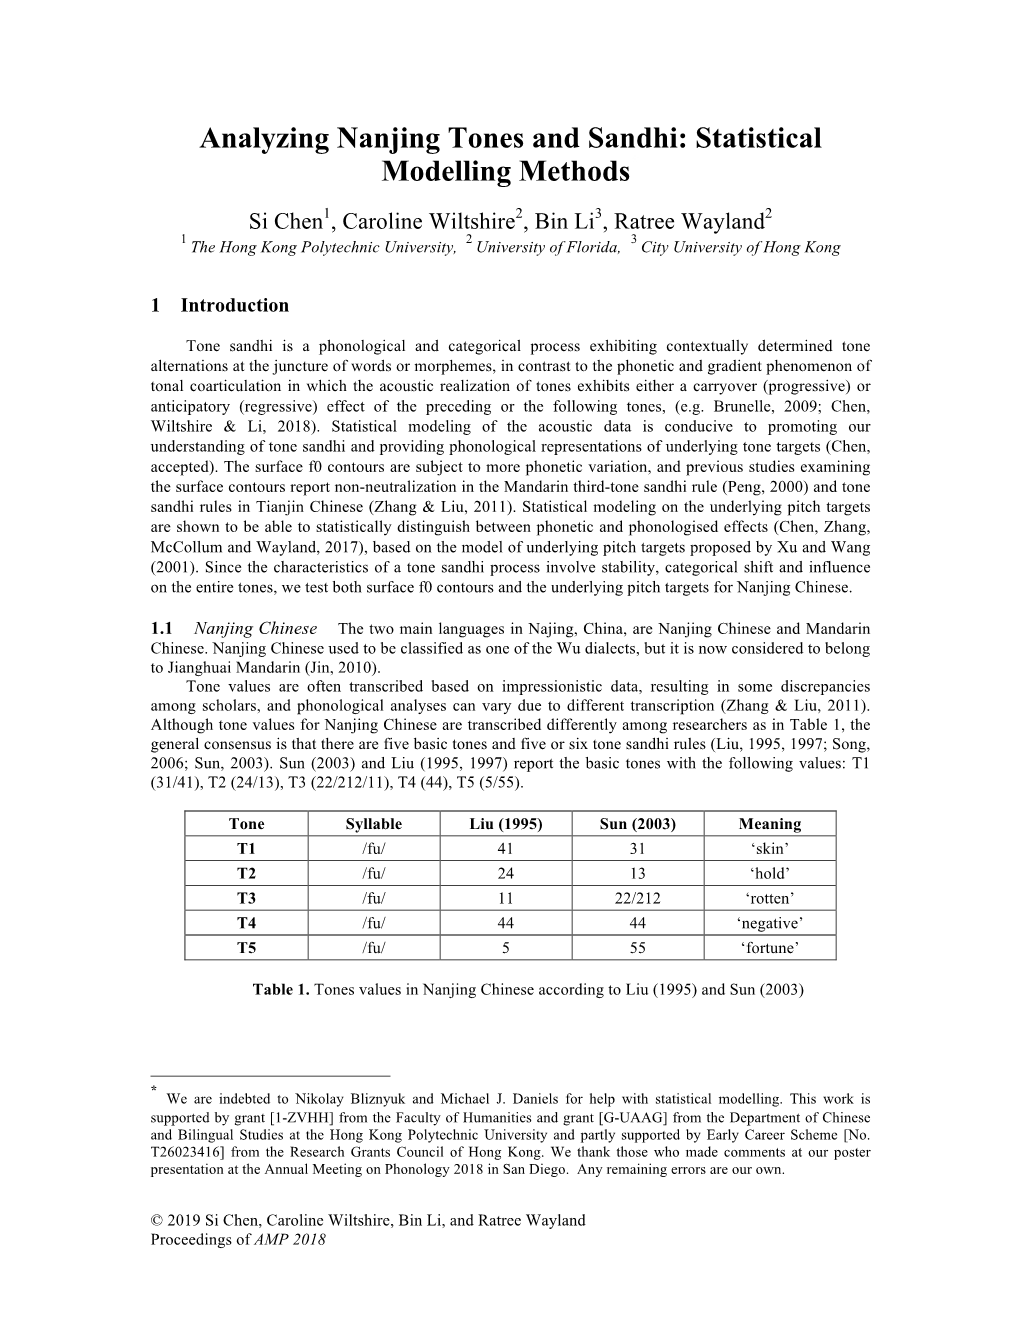 Analyzing Nanjing Tones and Sandhi: Statistical Modelling Methods*